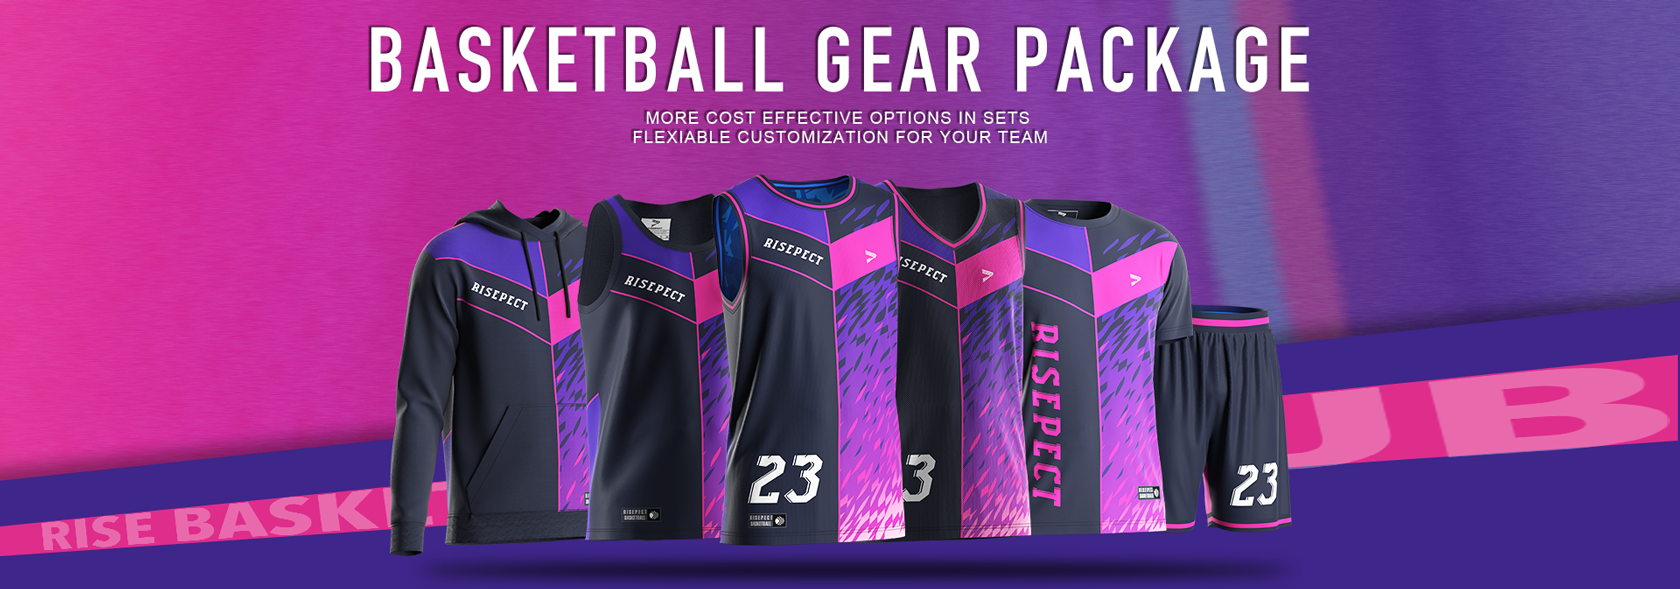 Basketball Gear Package